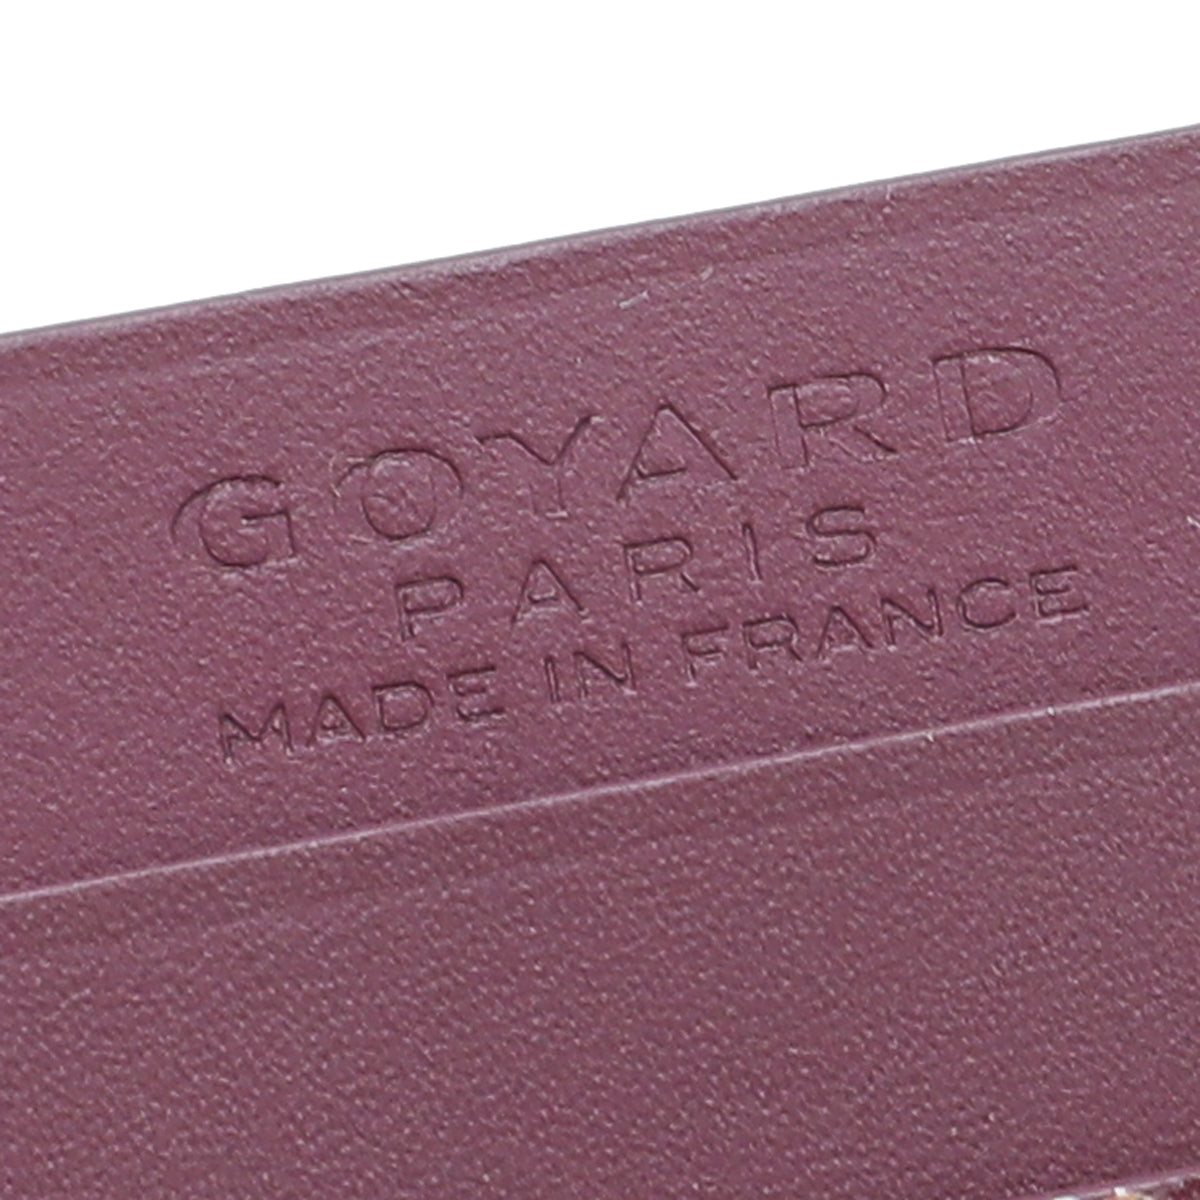 Wallet Goyard Burgundy in Other - 36627910